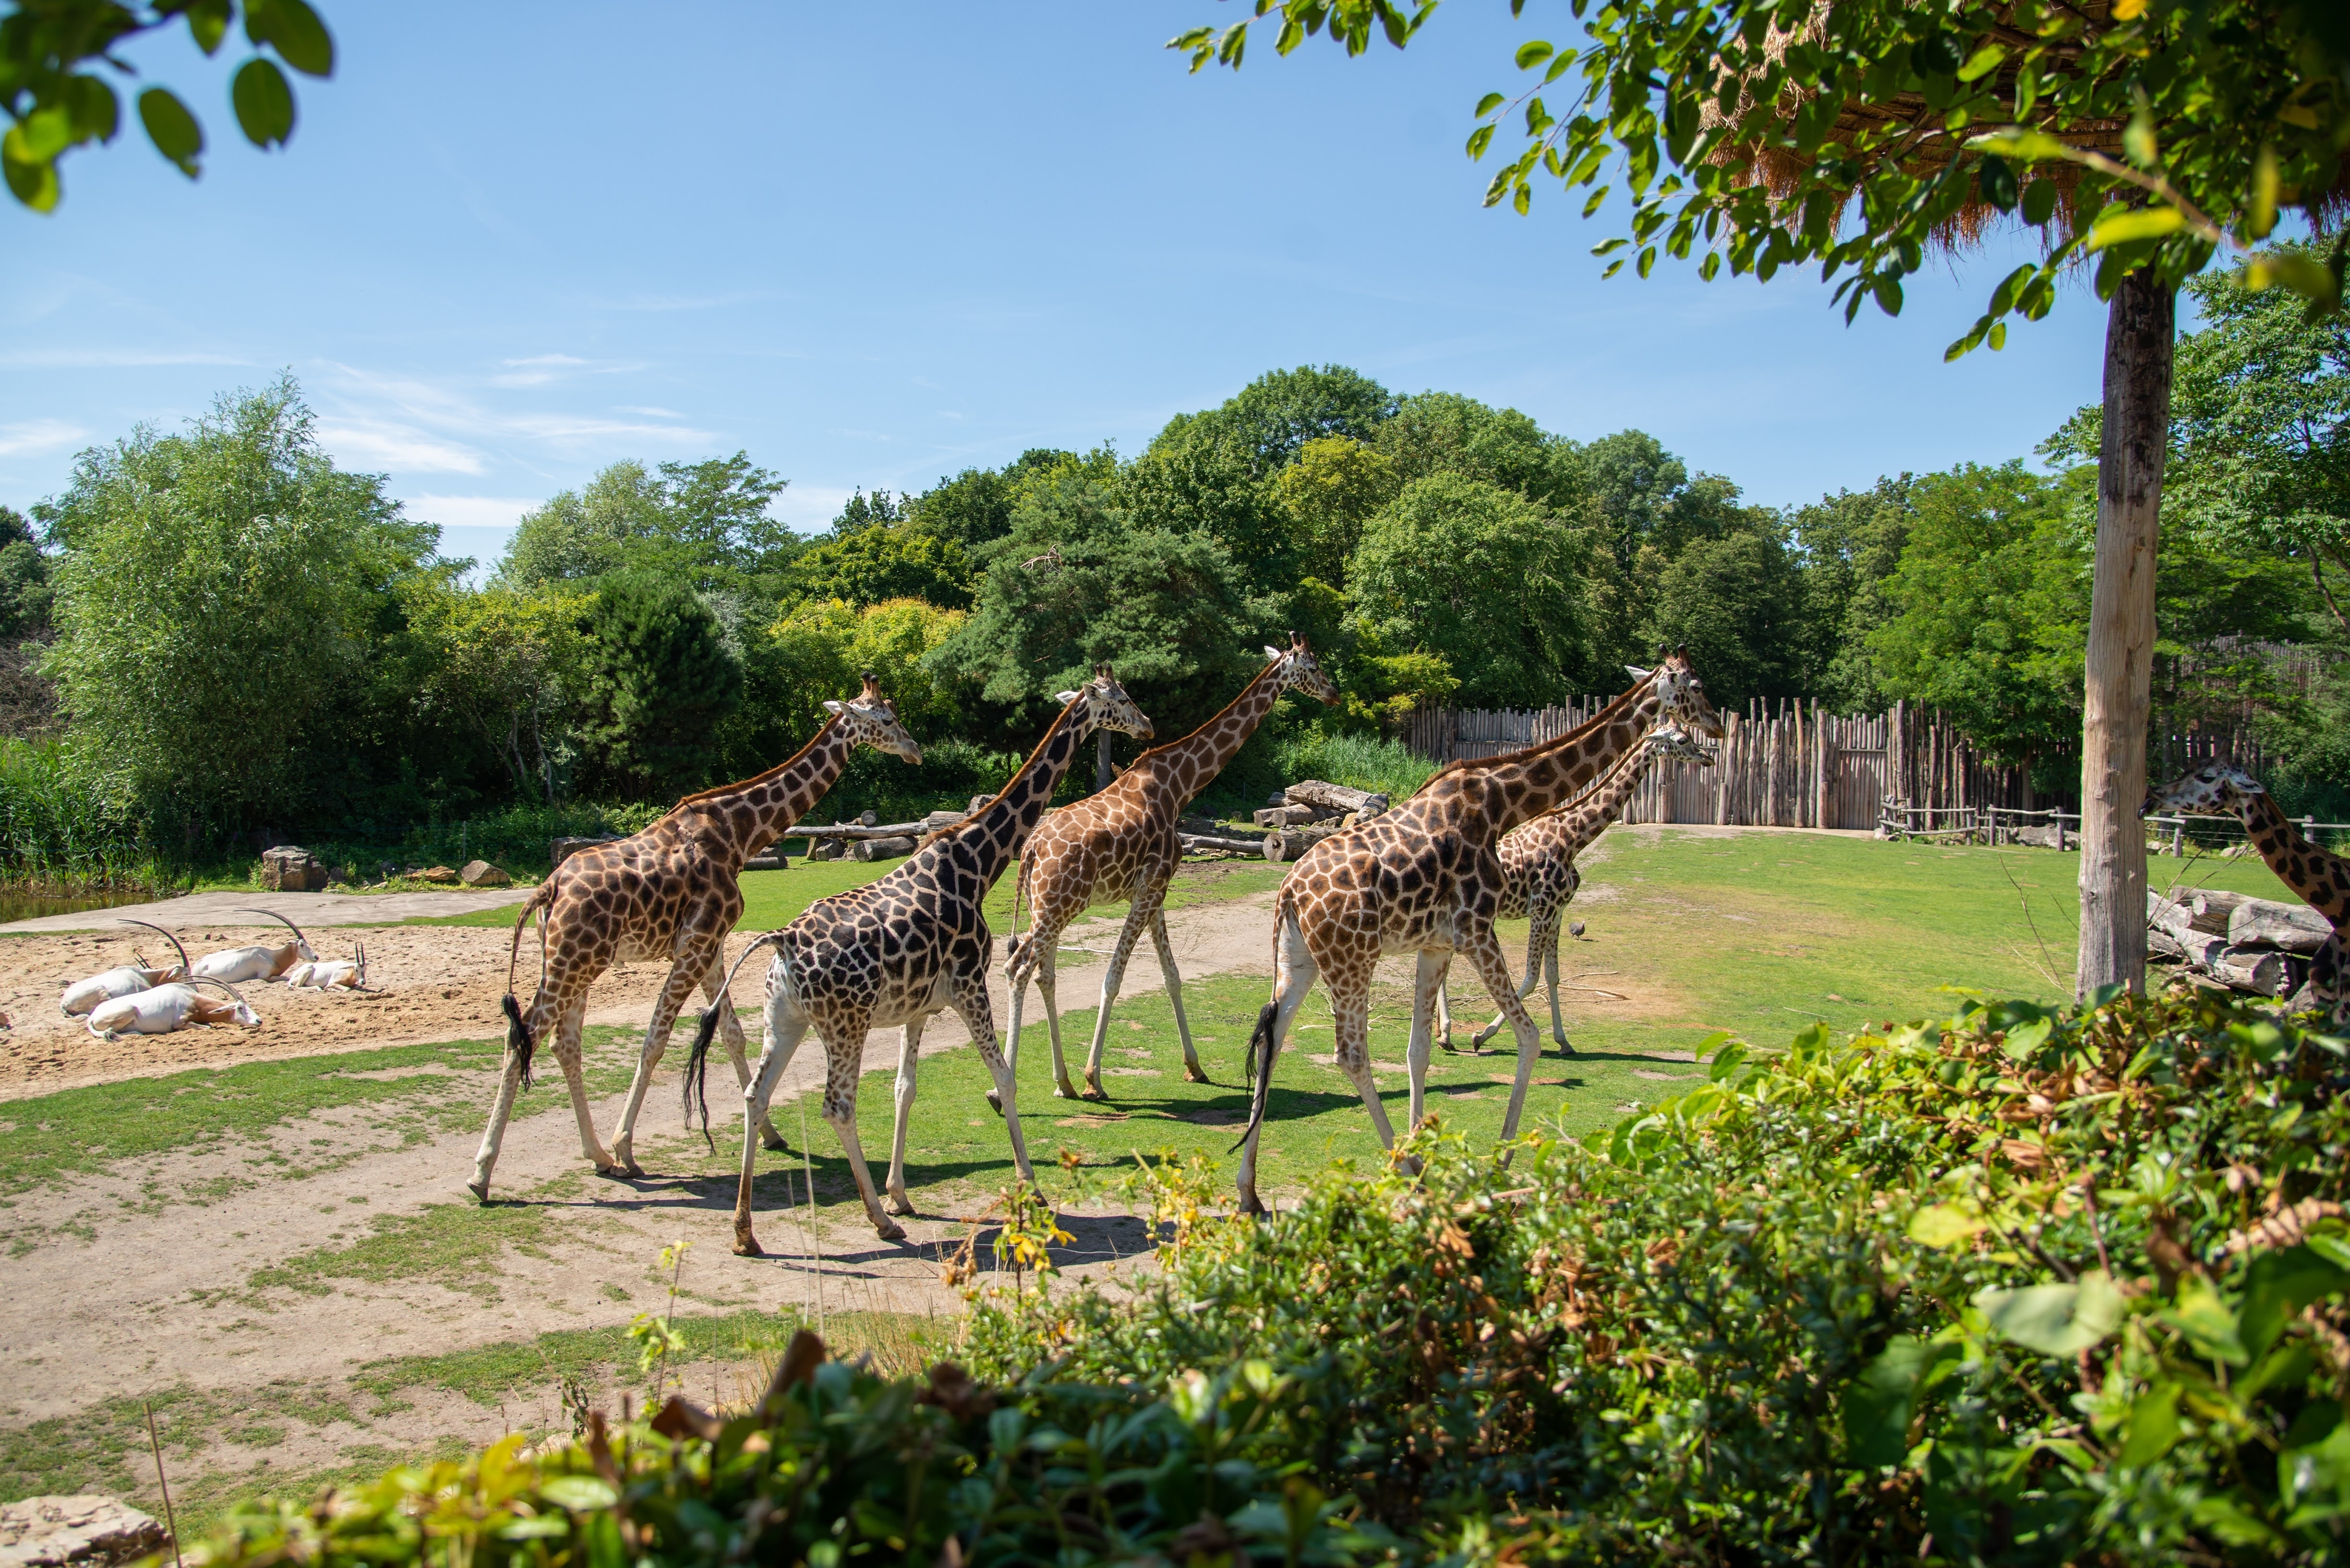 Jirafas en el zoo | Fuente: Shutterstock